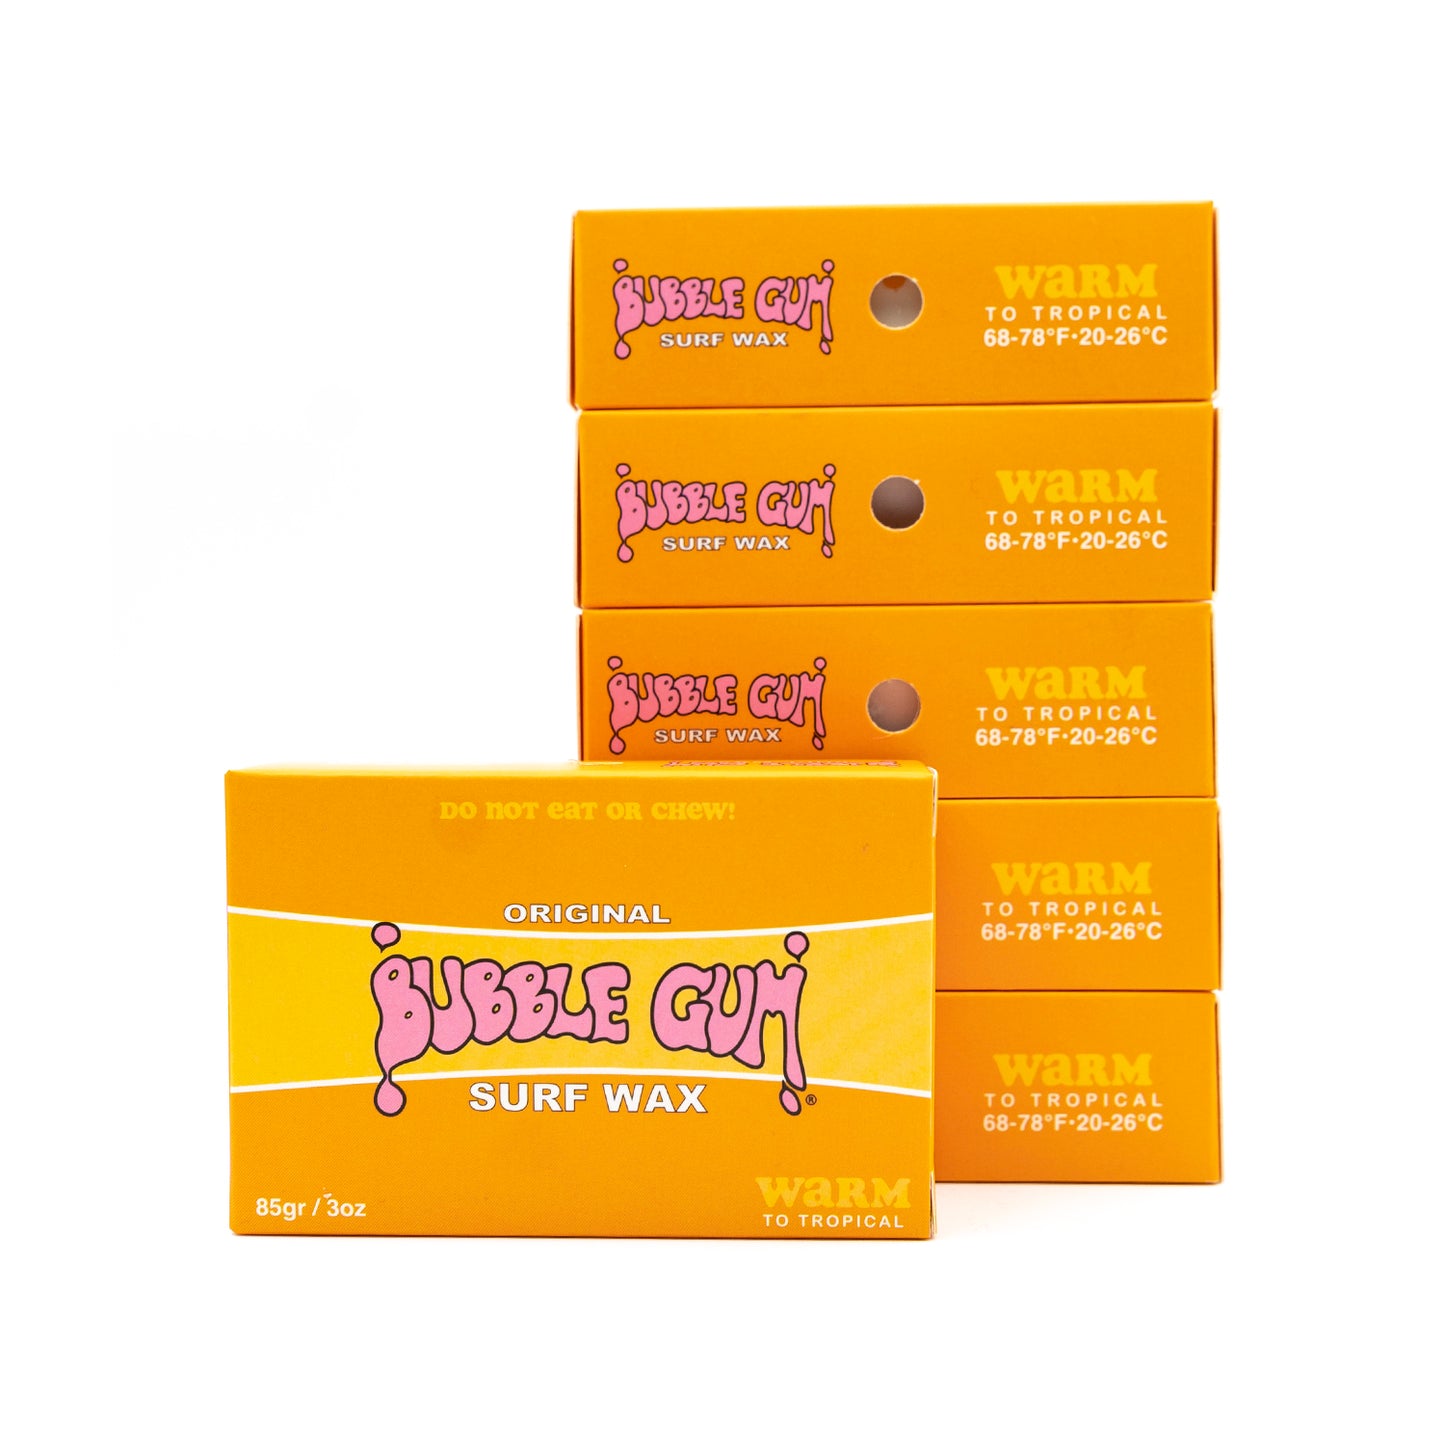 Bubble Gum "Original Formula" Surf Wax Box - Warm to Tropical - 68°- 78° - 6 Pack